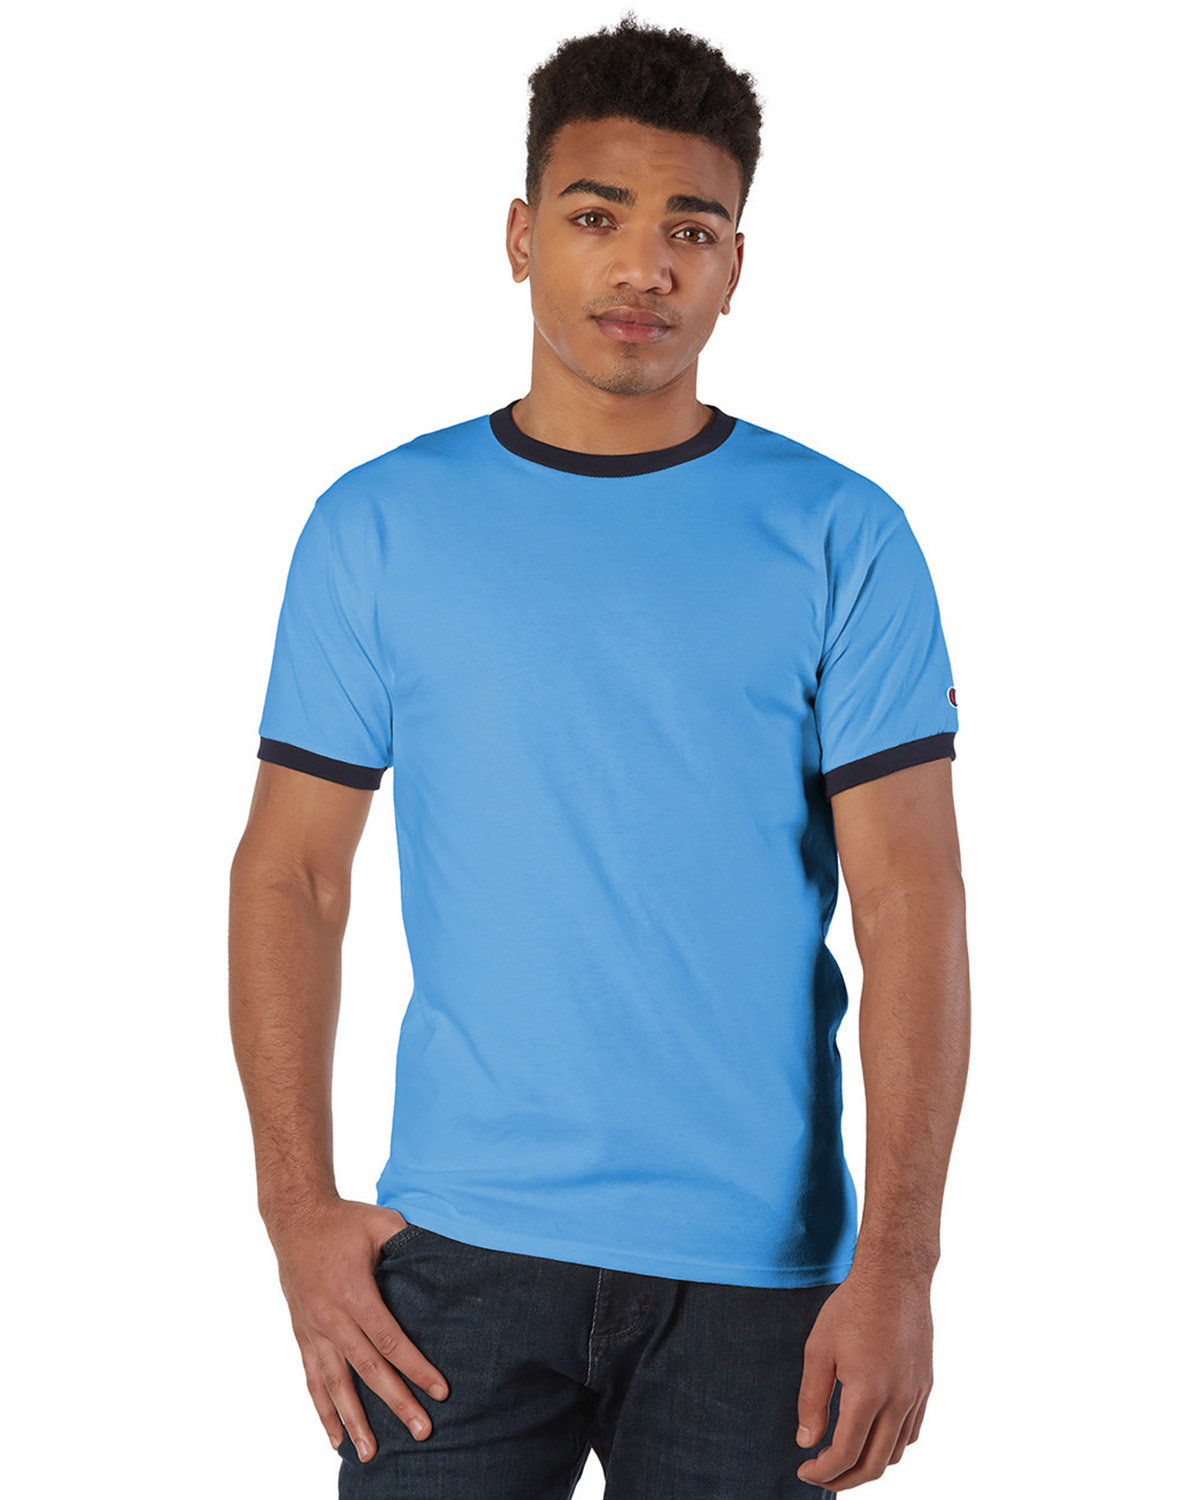 Bordova – T-Shirts – Buy/Shop A4 Online NJ in Uniforms